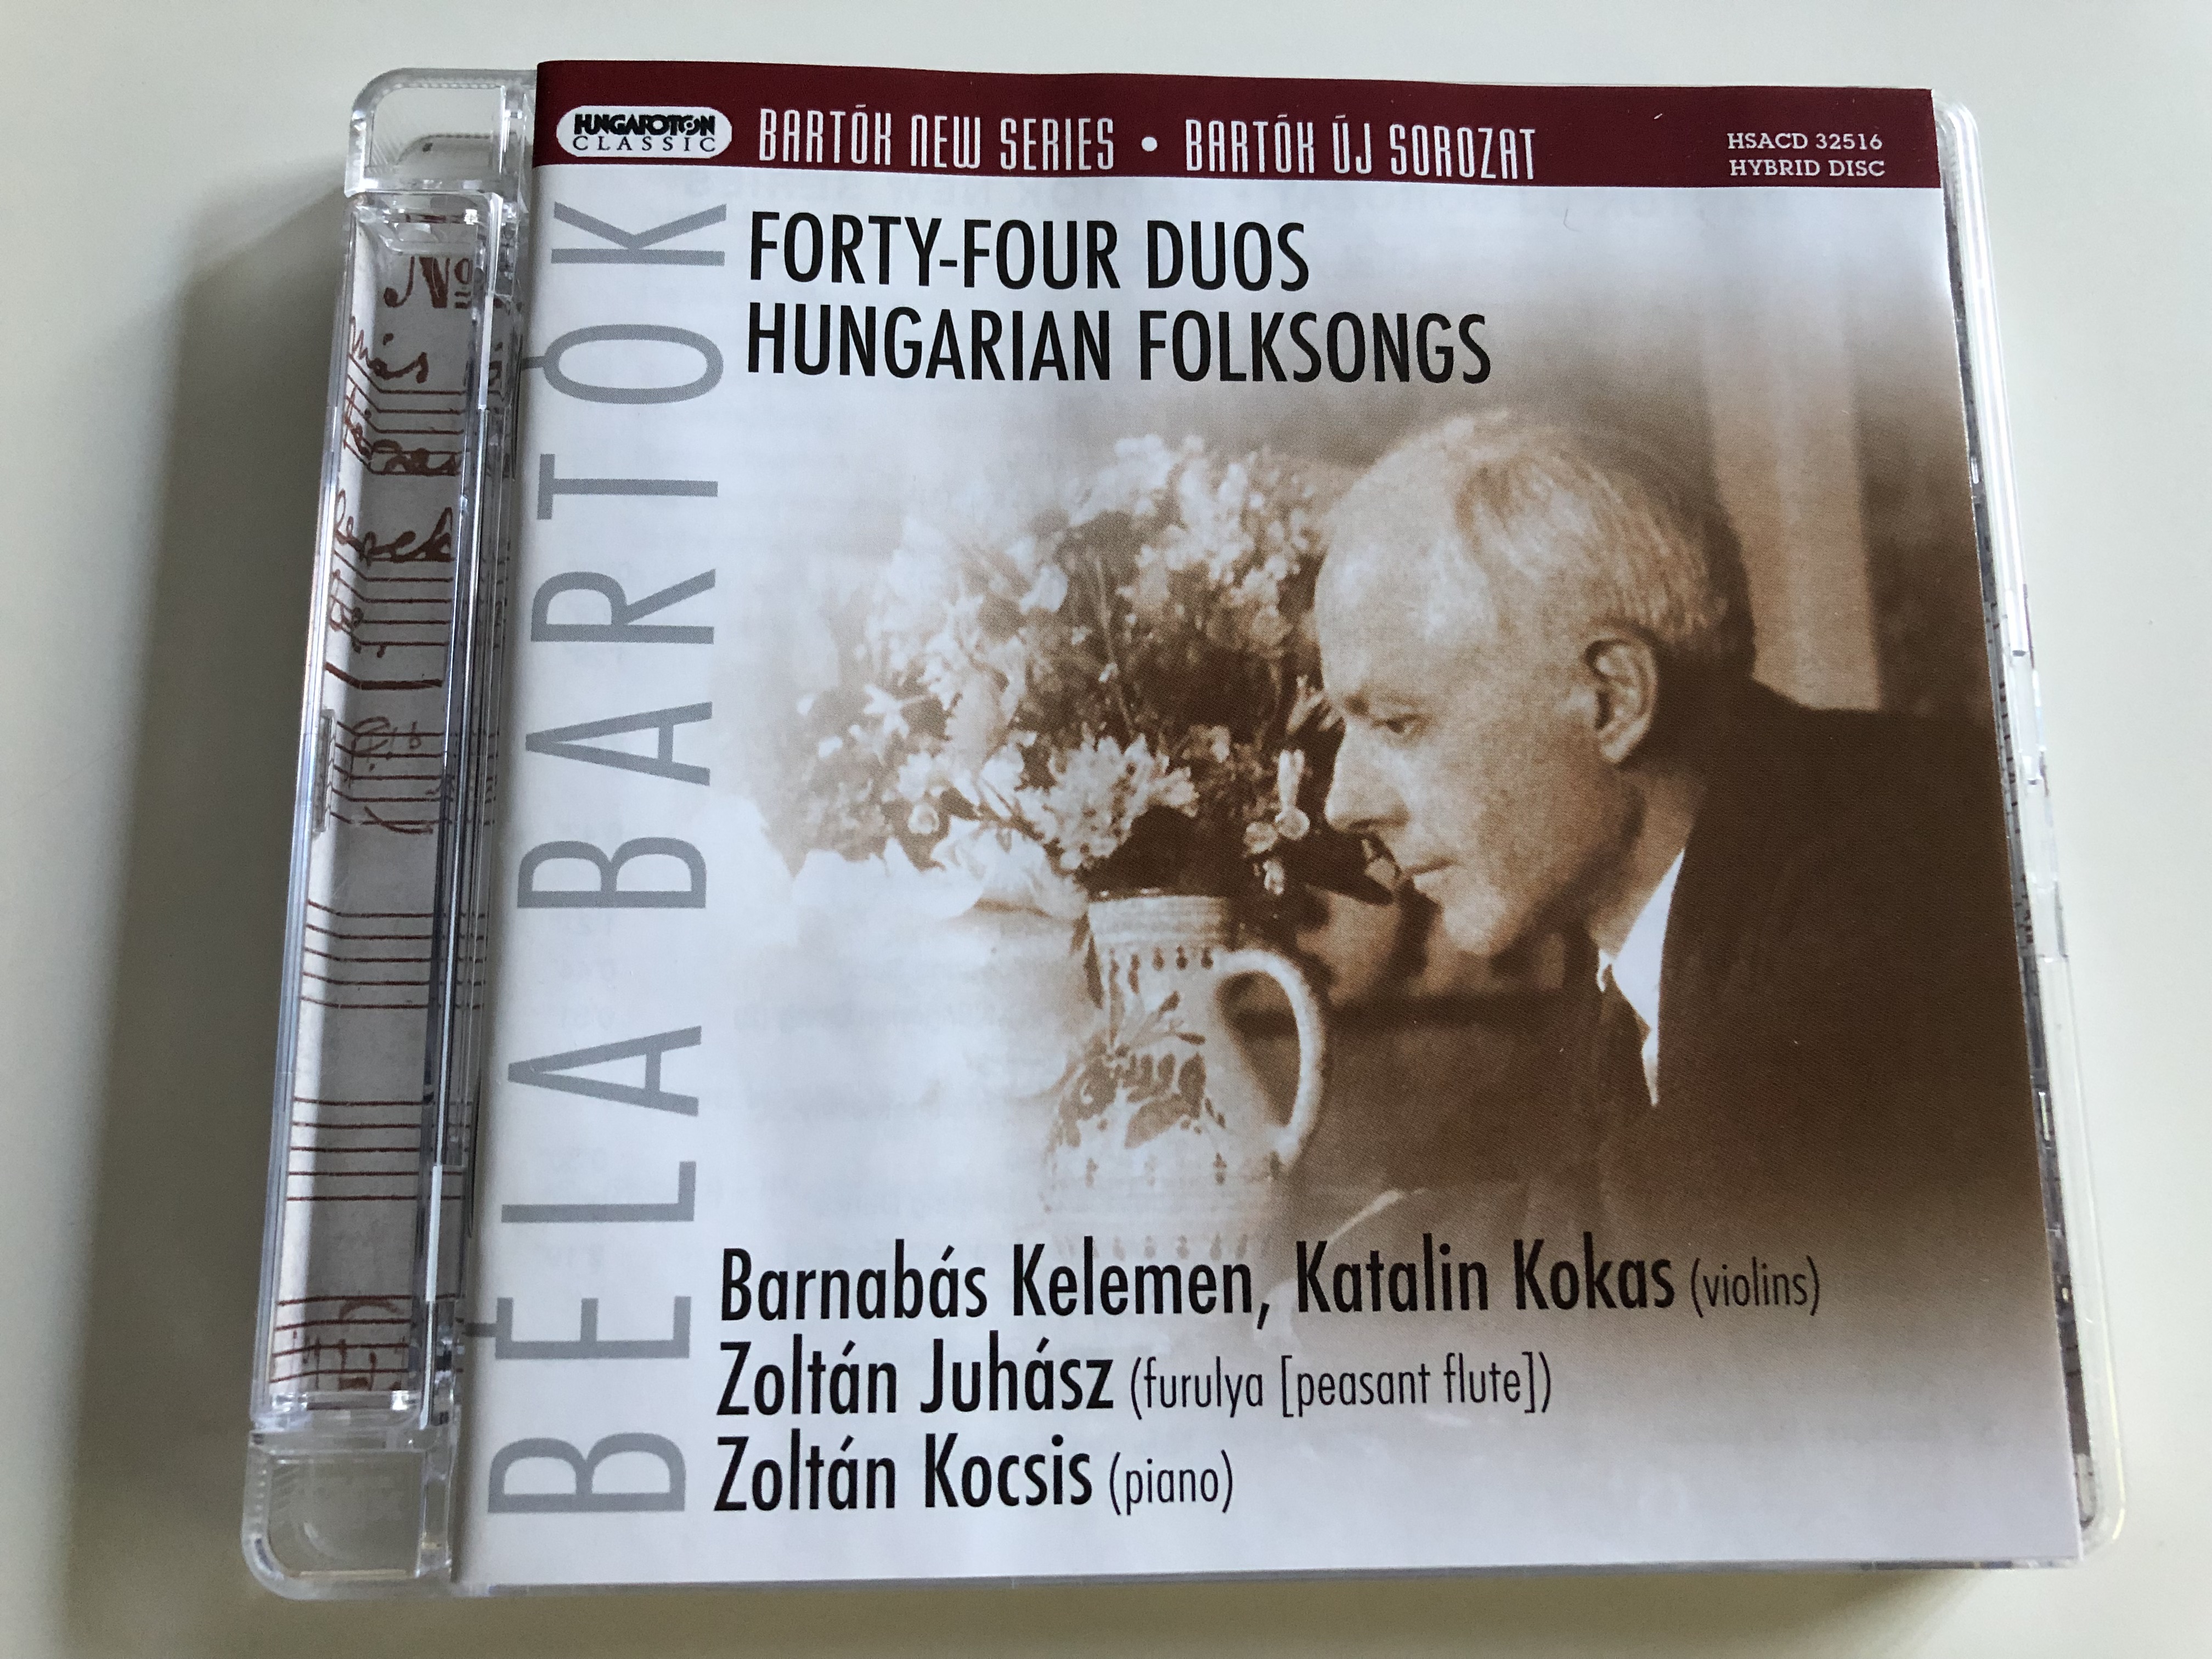 b-la-bart-k-forty-four-duos-hungarian-folksongs-barnab-s-kelemen-katalin-kokas-violins-zolt-n-juh-sz-furulya-peasant-flute-zolt-n-kocsis-piano-hungaroton-classic-audio-cd-2008-hcd-32516-1-.jpg